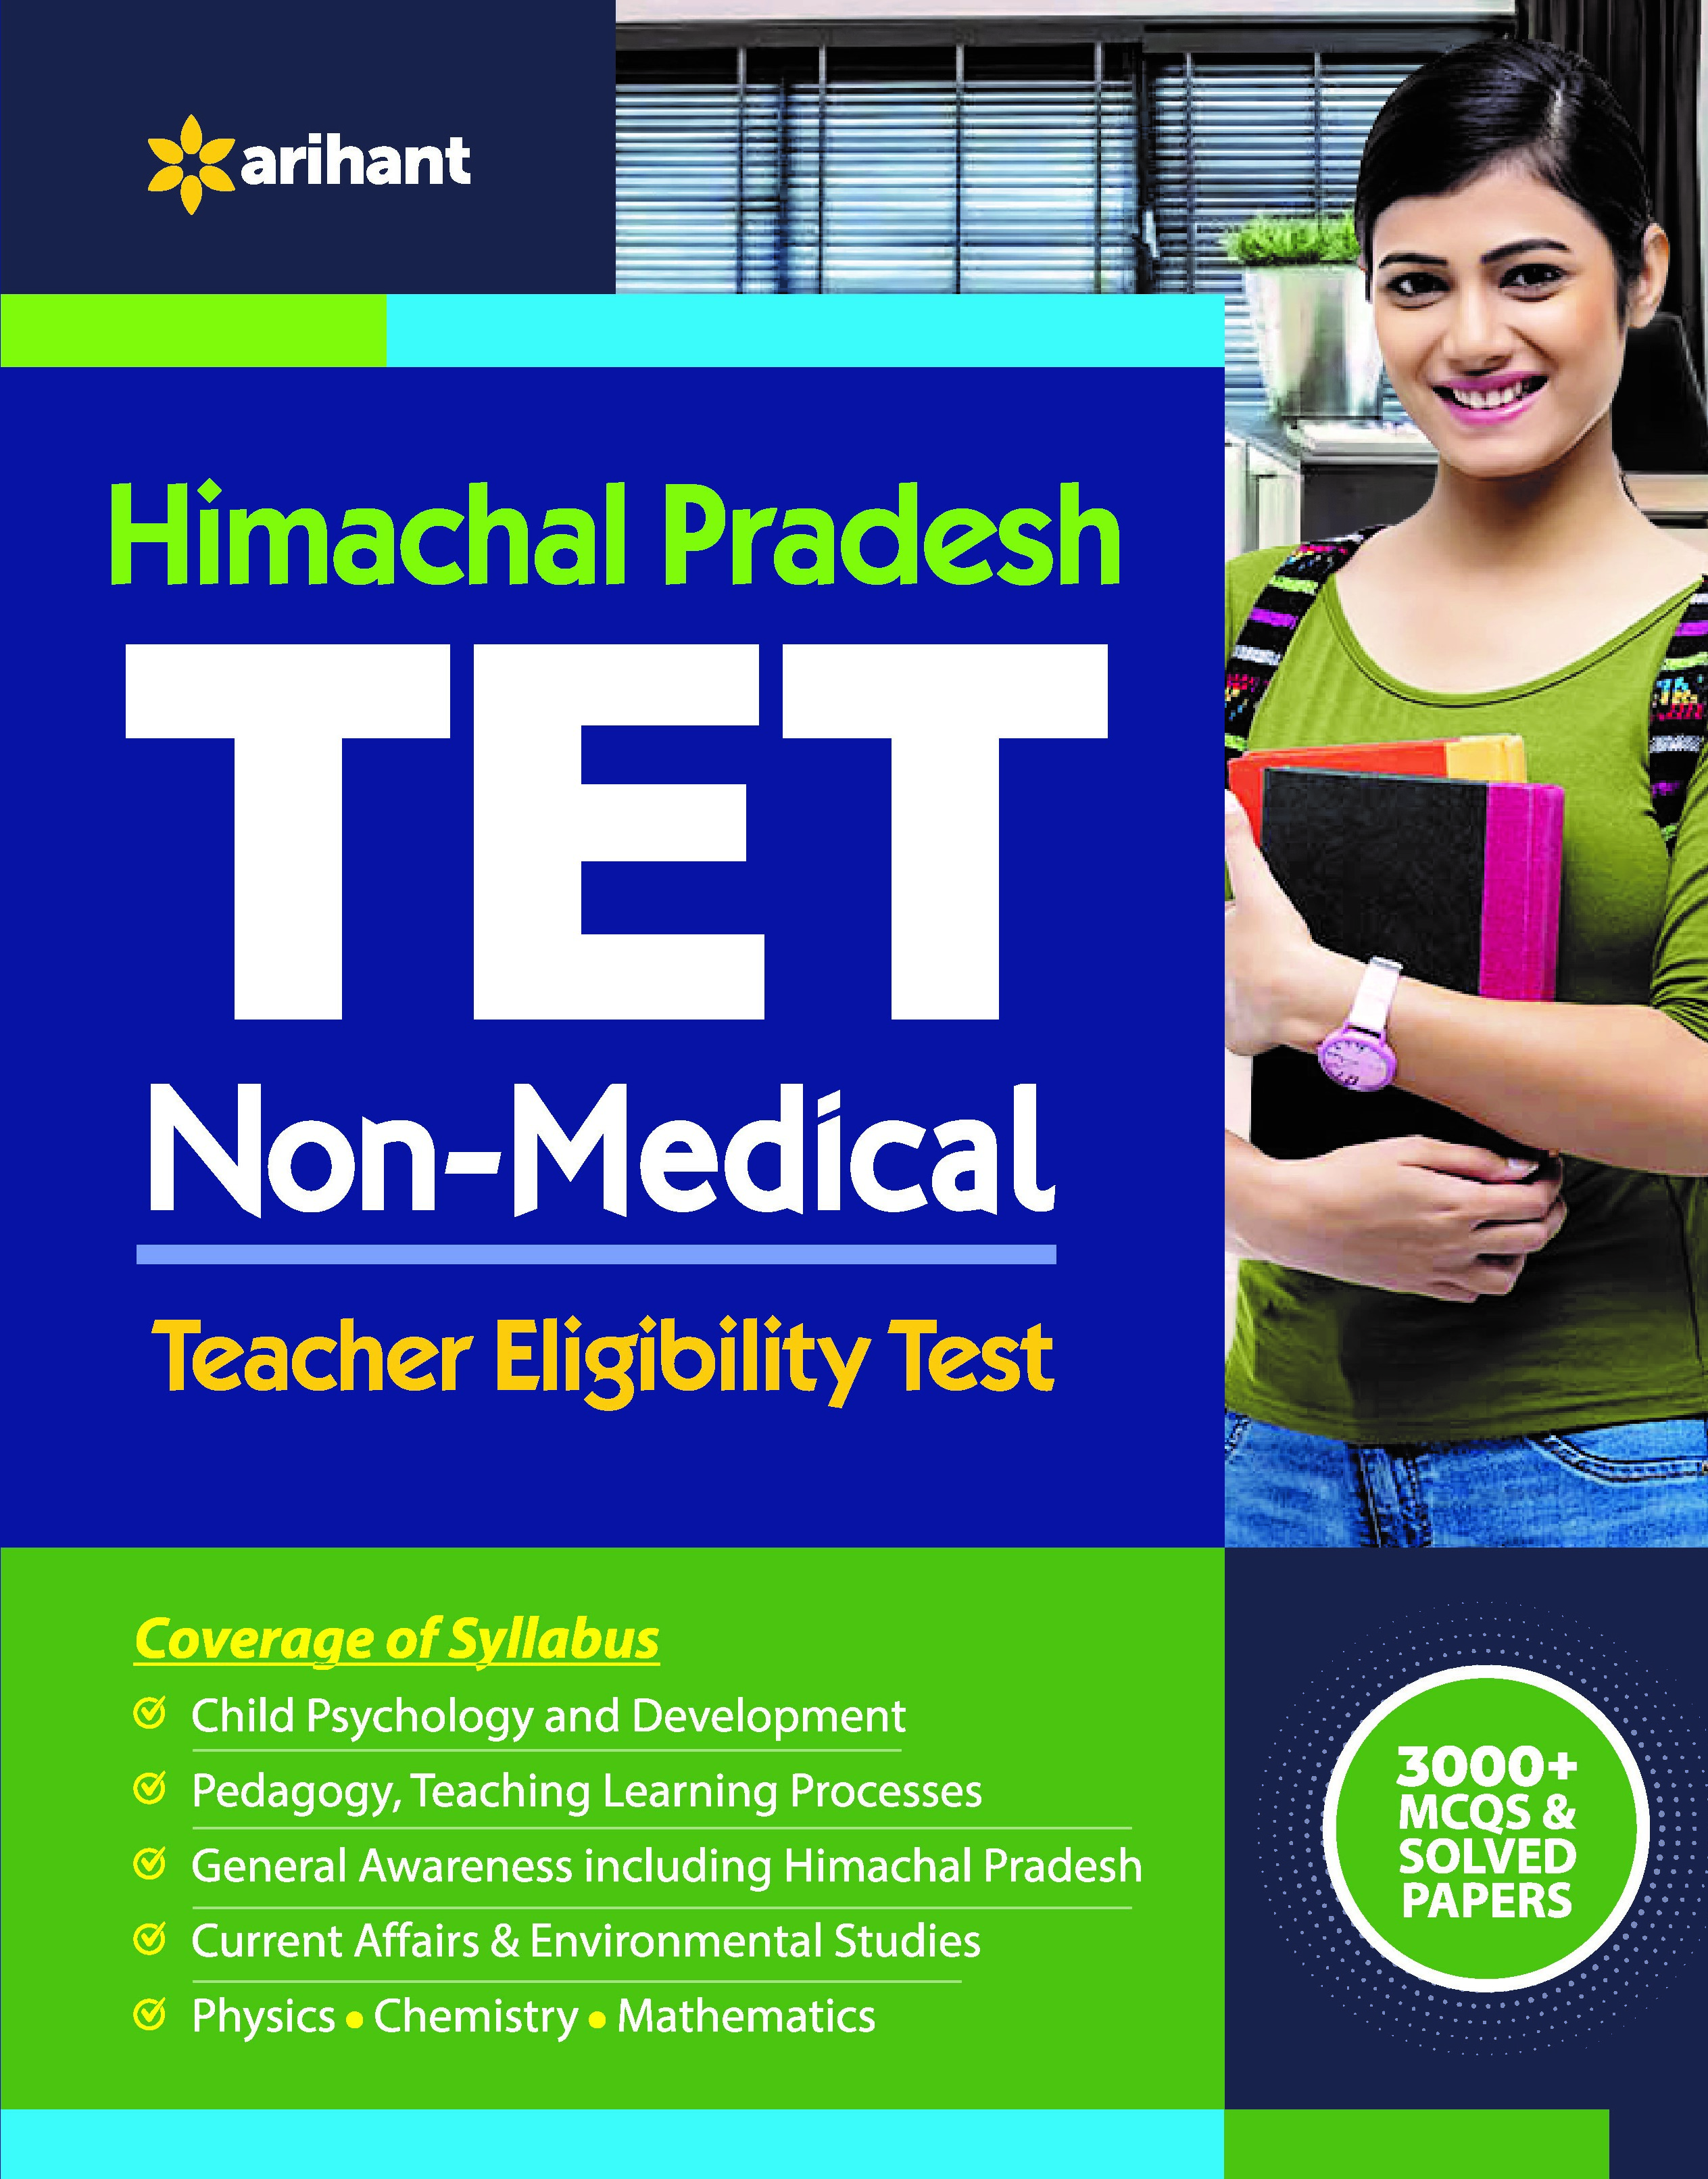 HPTET Himachal Pradesh Teacher Eligibility Test for Non-Medical TGT